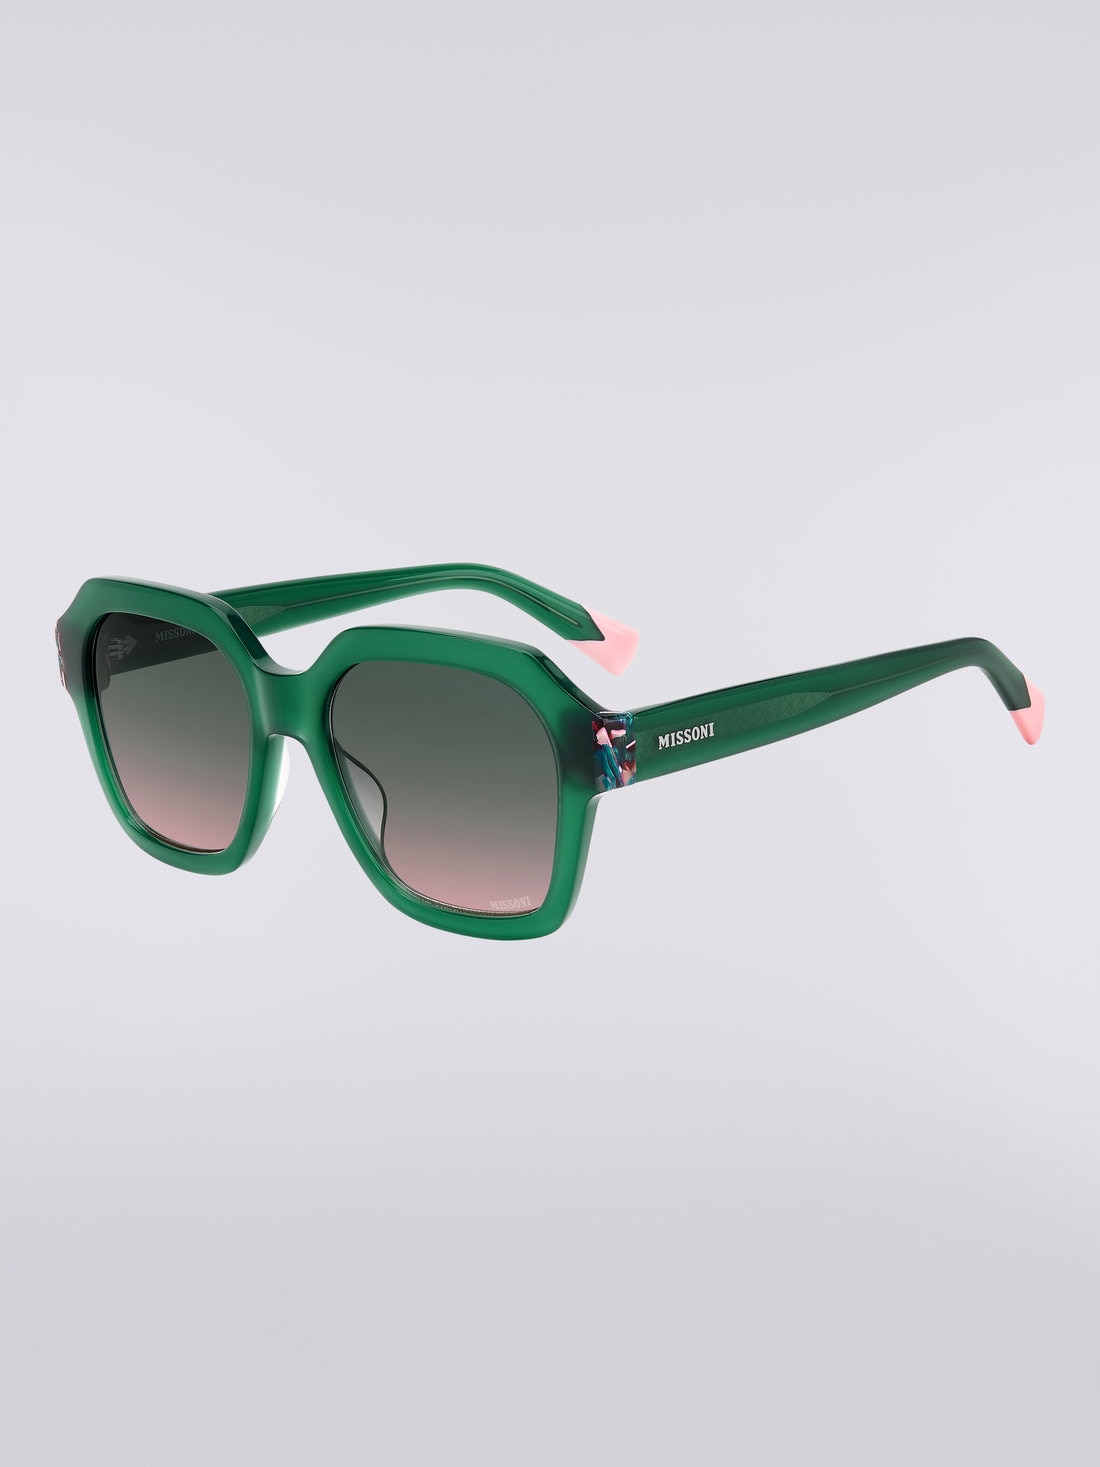 Missoni Seasonal Acetate Sunglasses, Green & Pink - 8051575840159 - 1